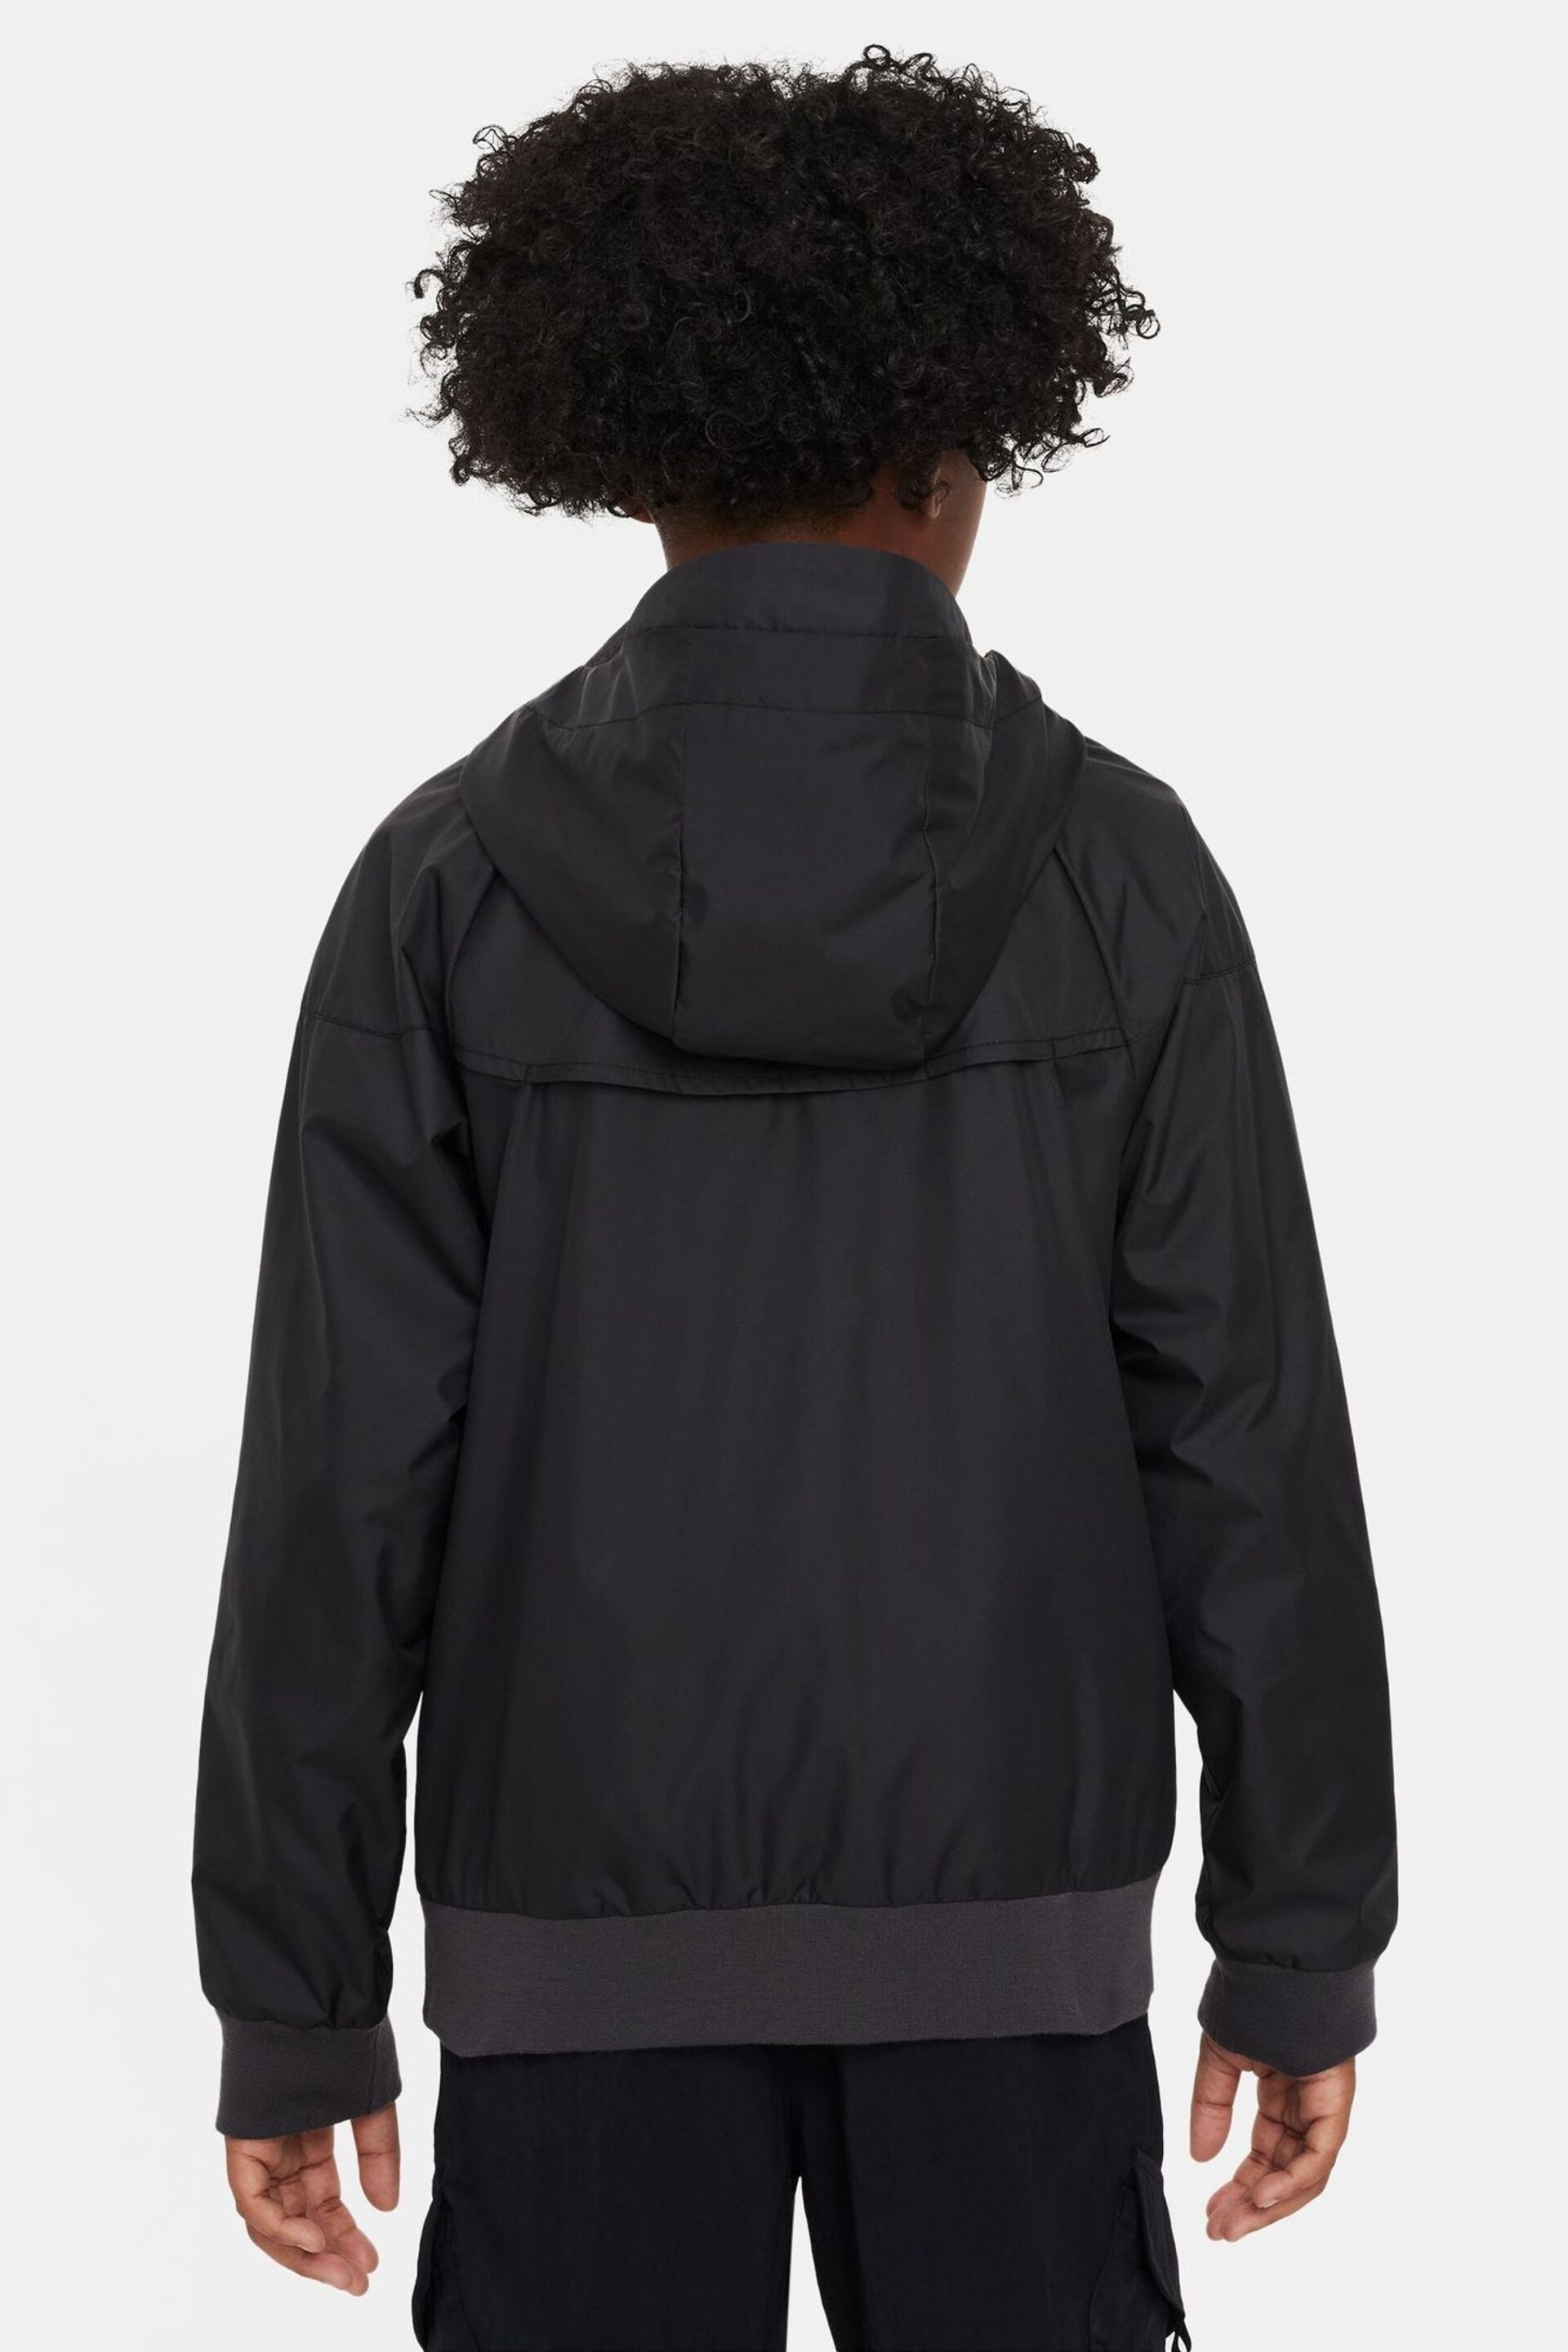 Nike Black Sportswear Windrunner Hooded Jacket - Image 3 of 7